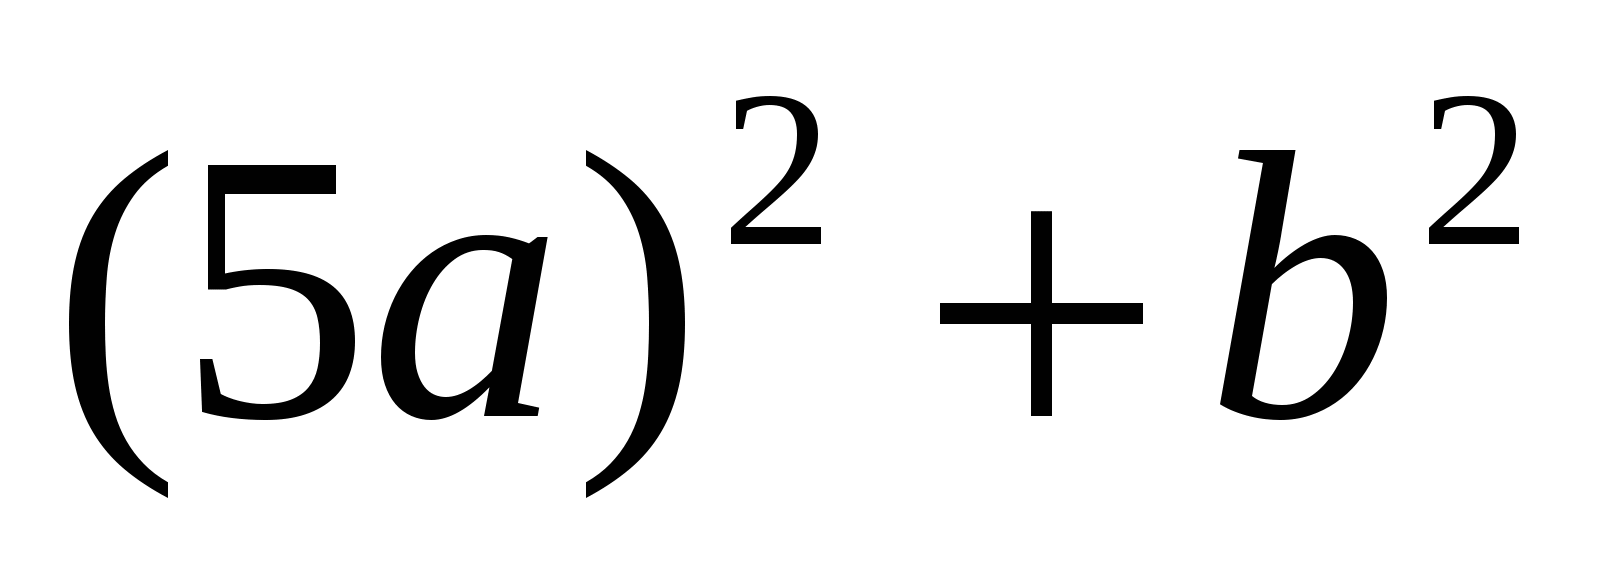 Формула разности квадратов